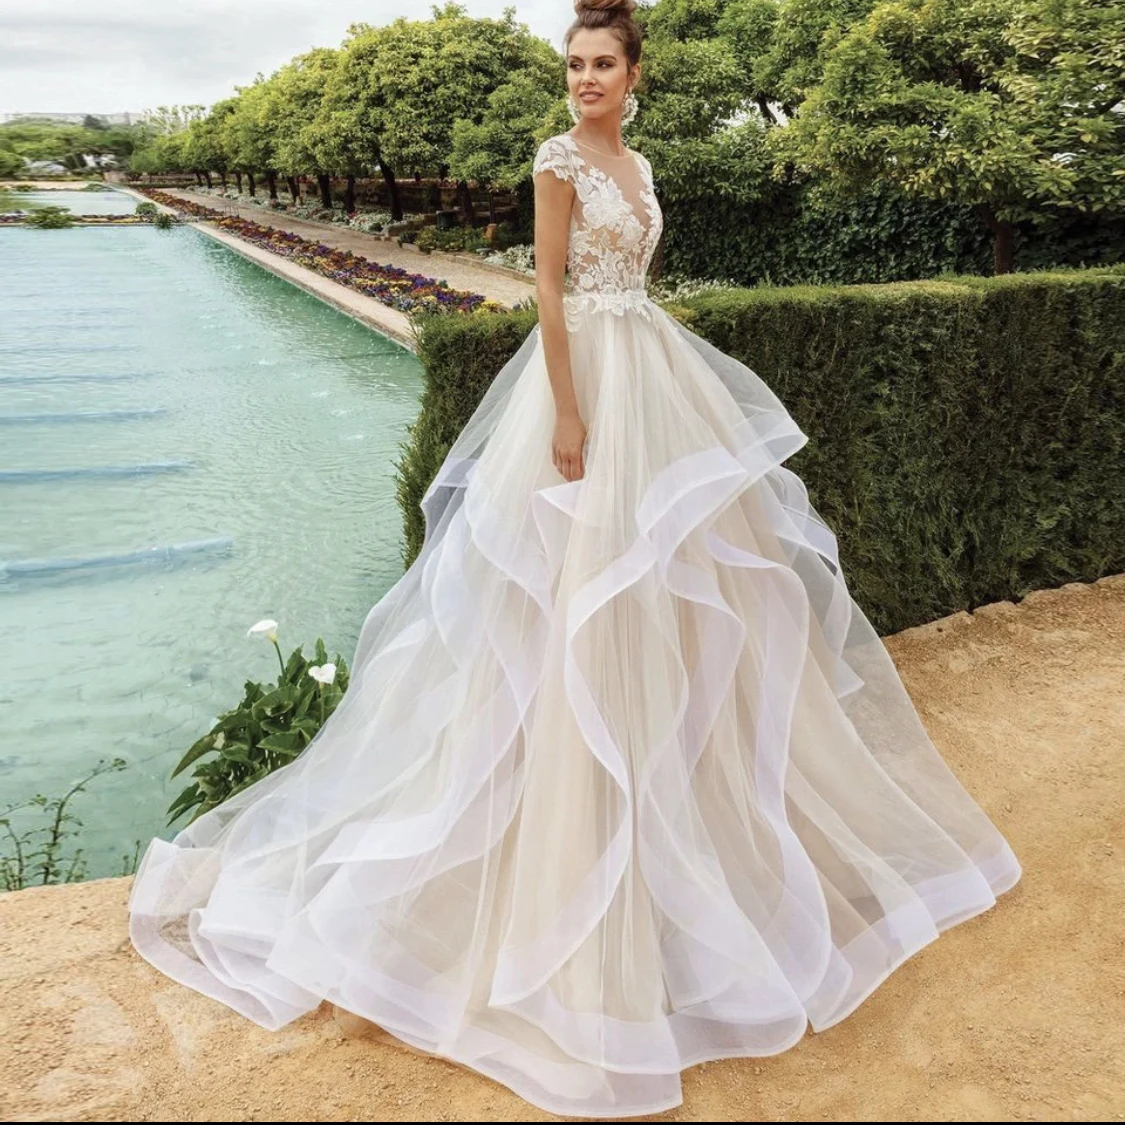 Princess-cut wedding gowns in... - Elizabeth Passion | Facebook